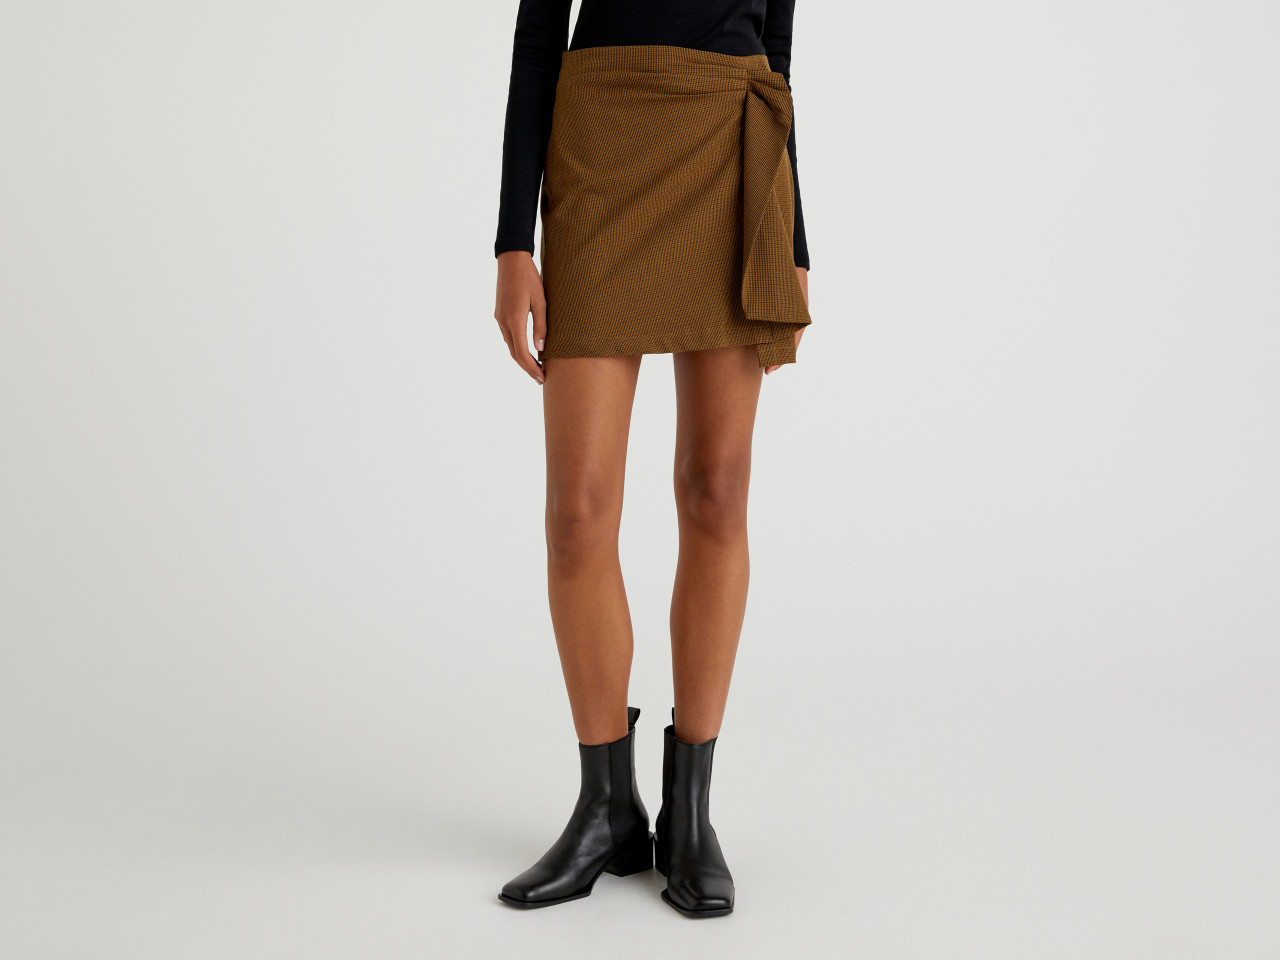 discount 85% Green 82                  EU KIDS FASHION Skirts Corduroy Benetton casual skirt 